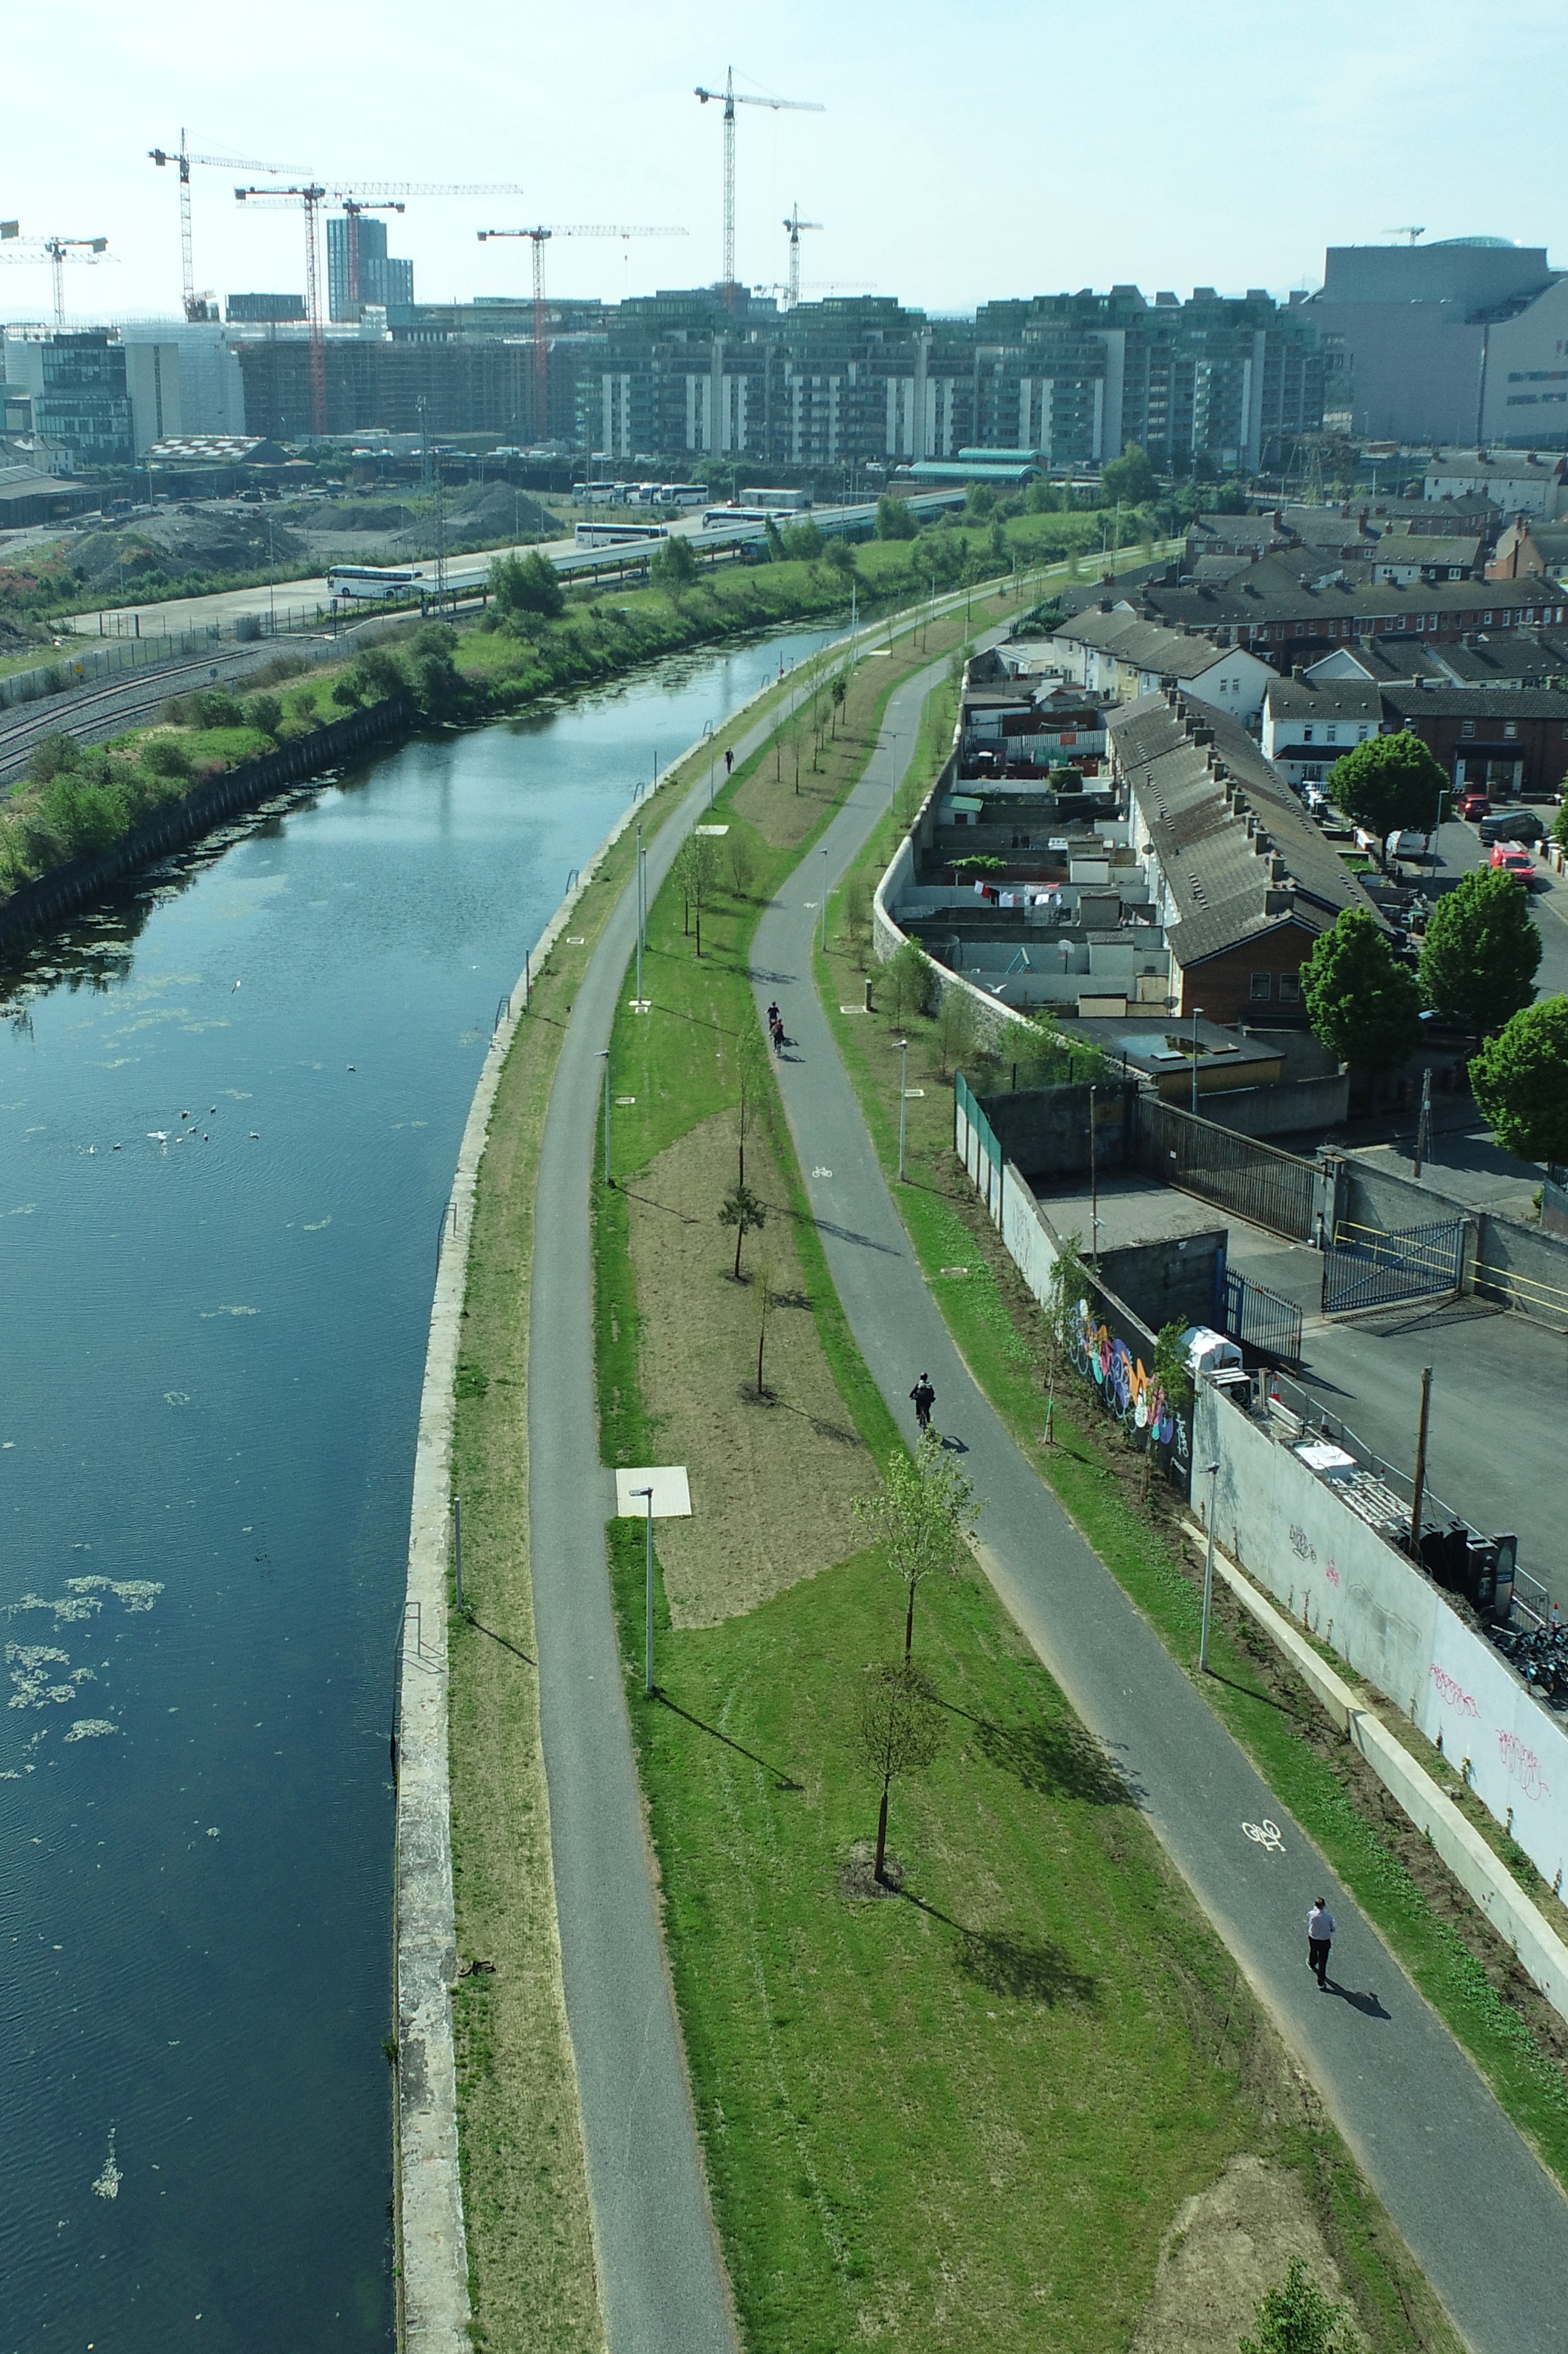 Aerial view of Royal Canal premium cycle lane